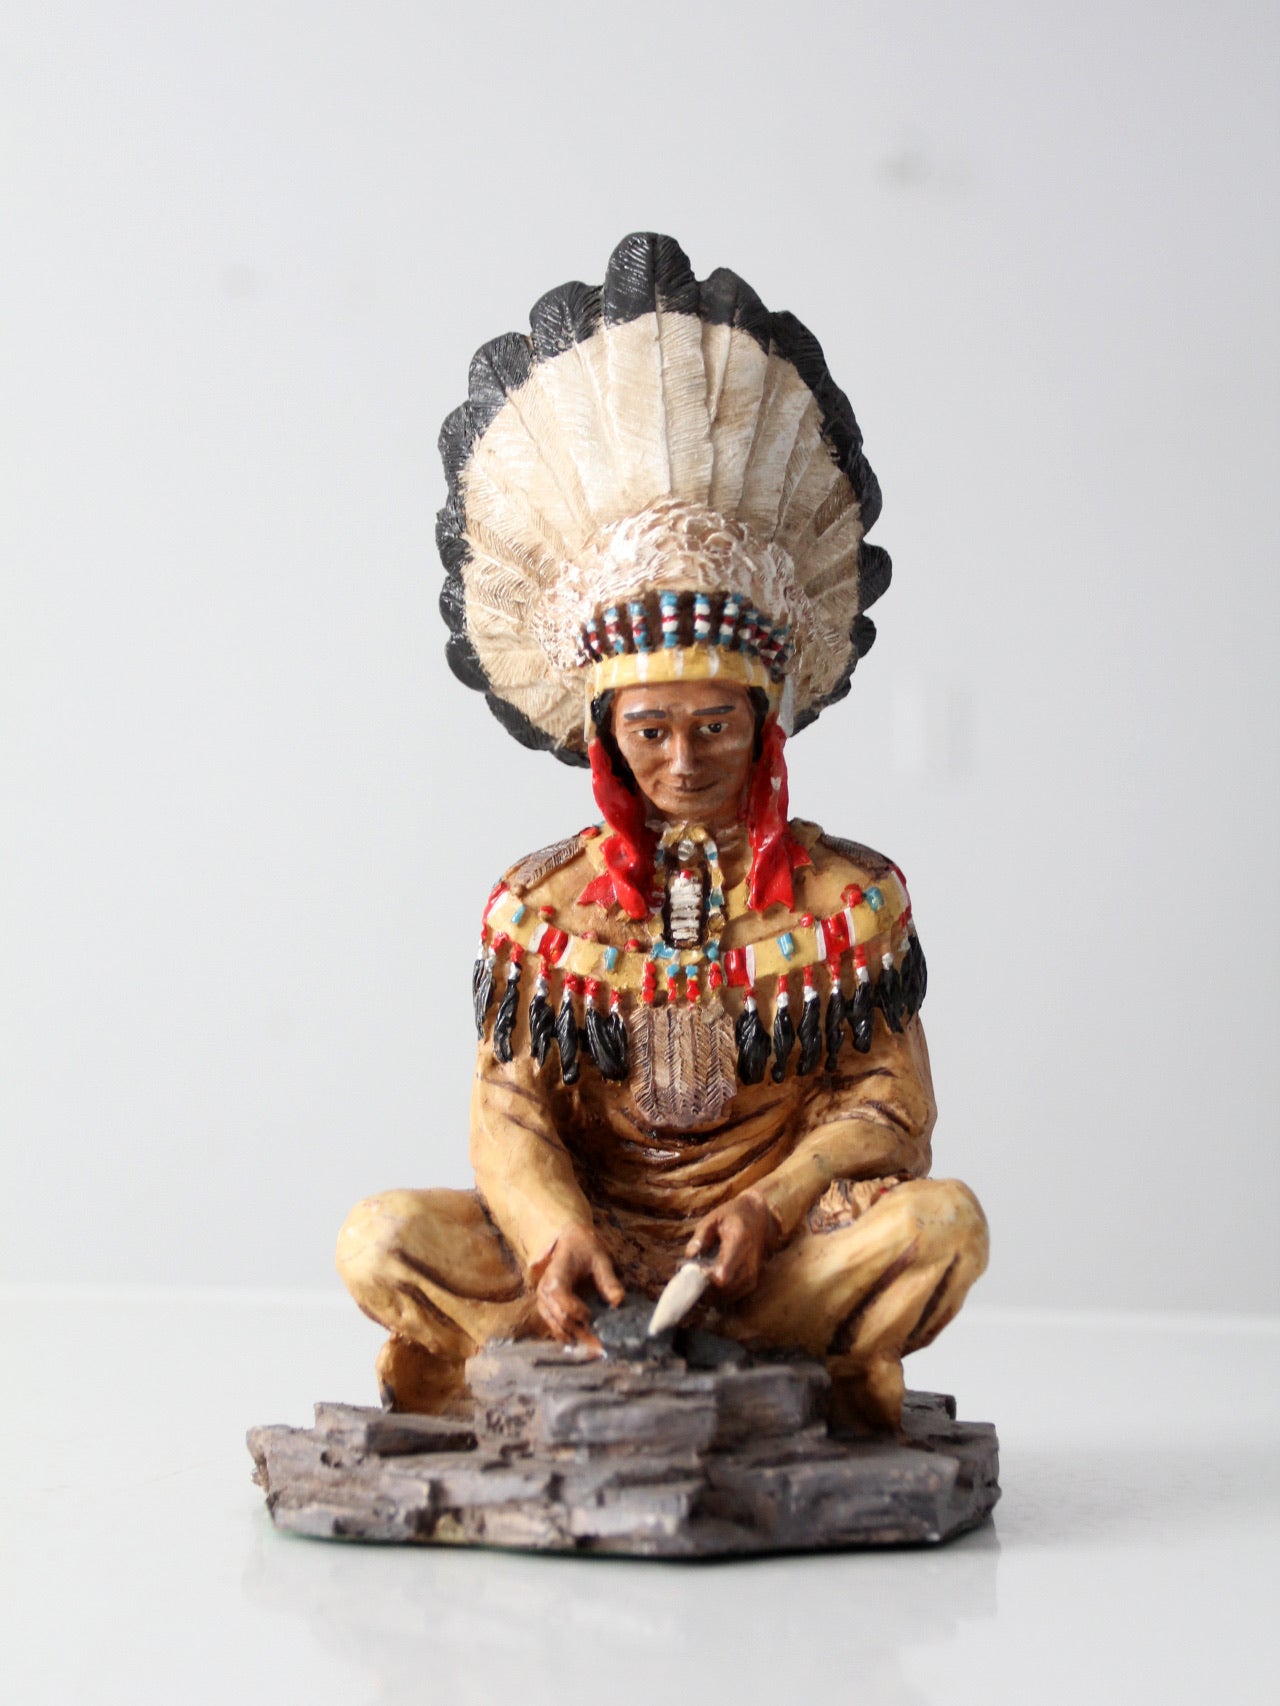 vintage Old West Visions Native American figurine